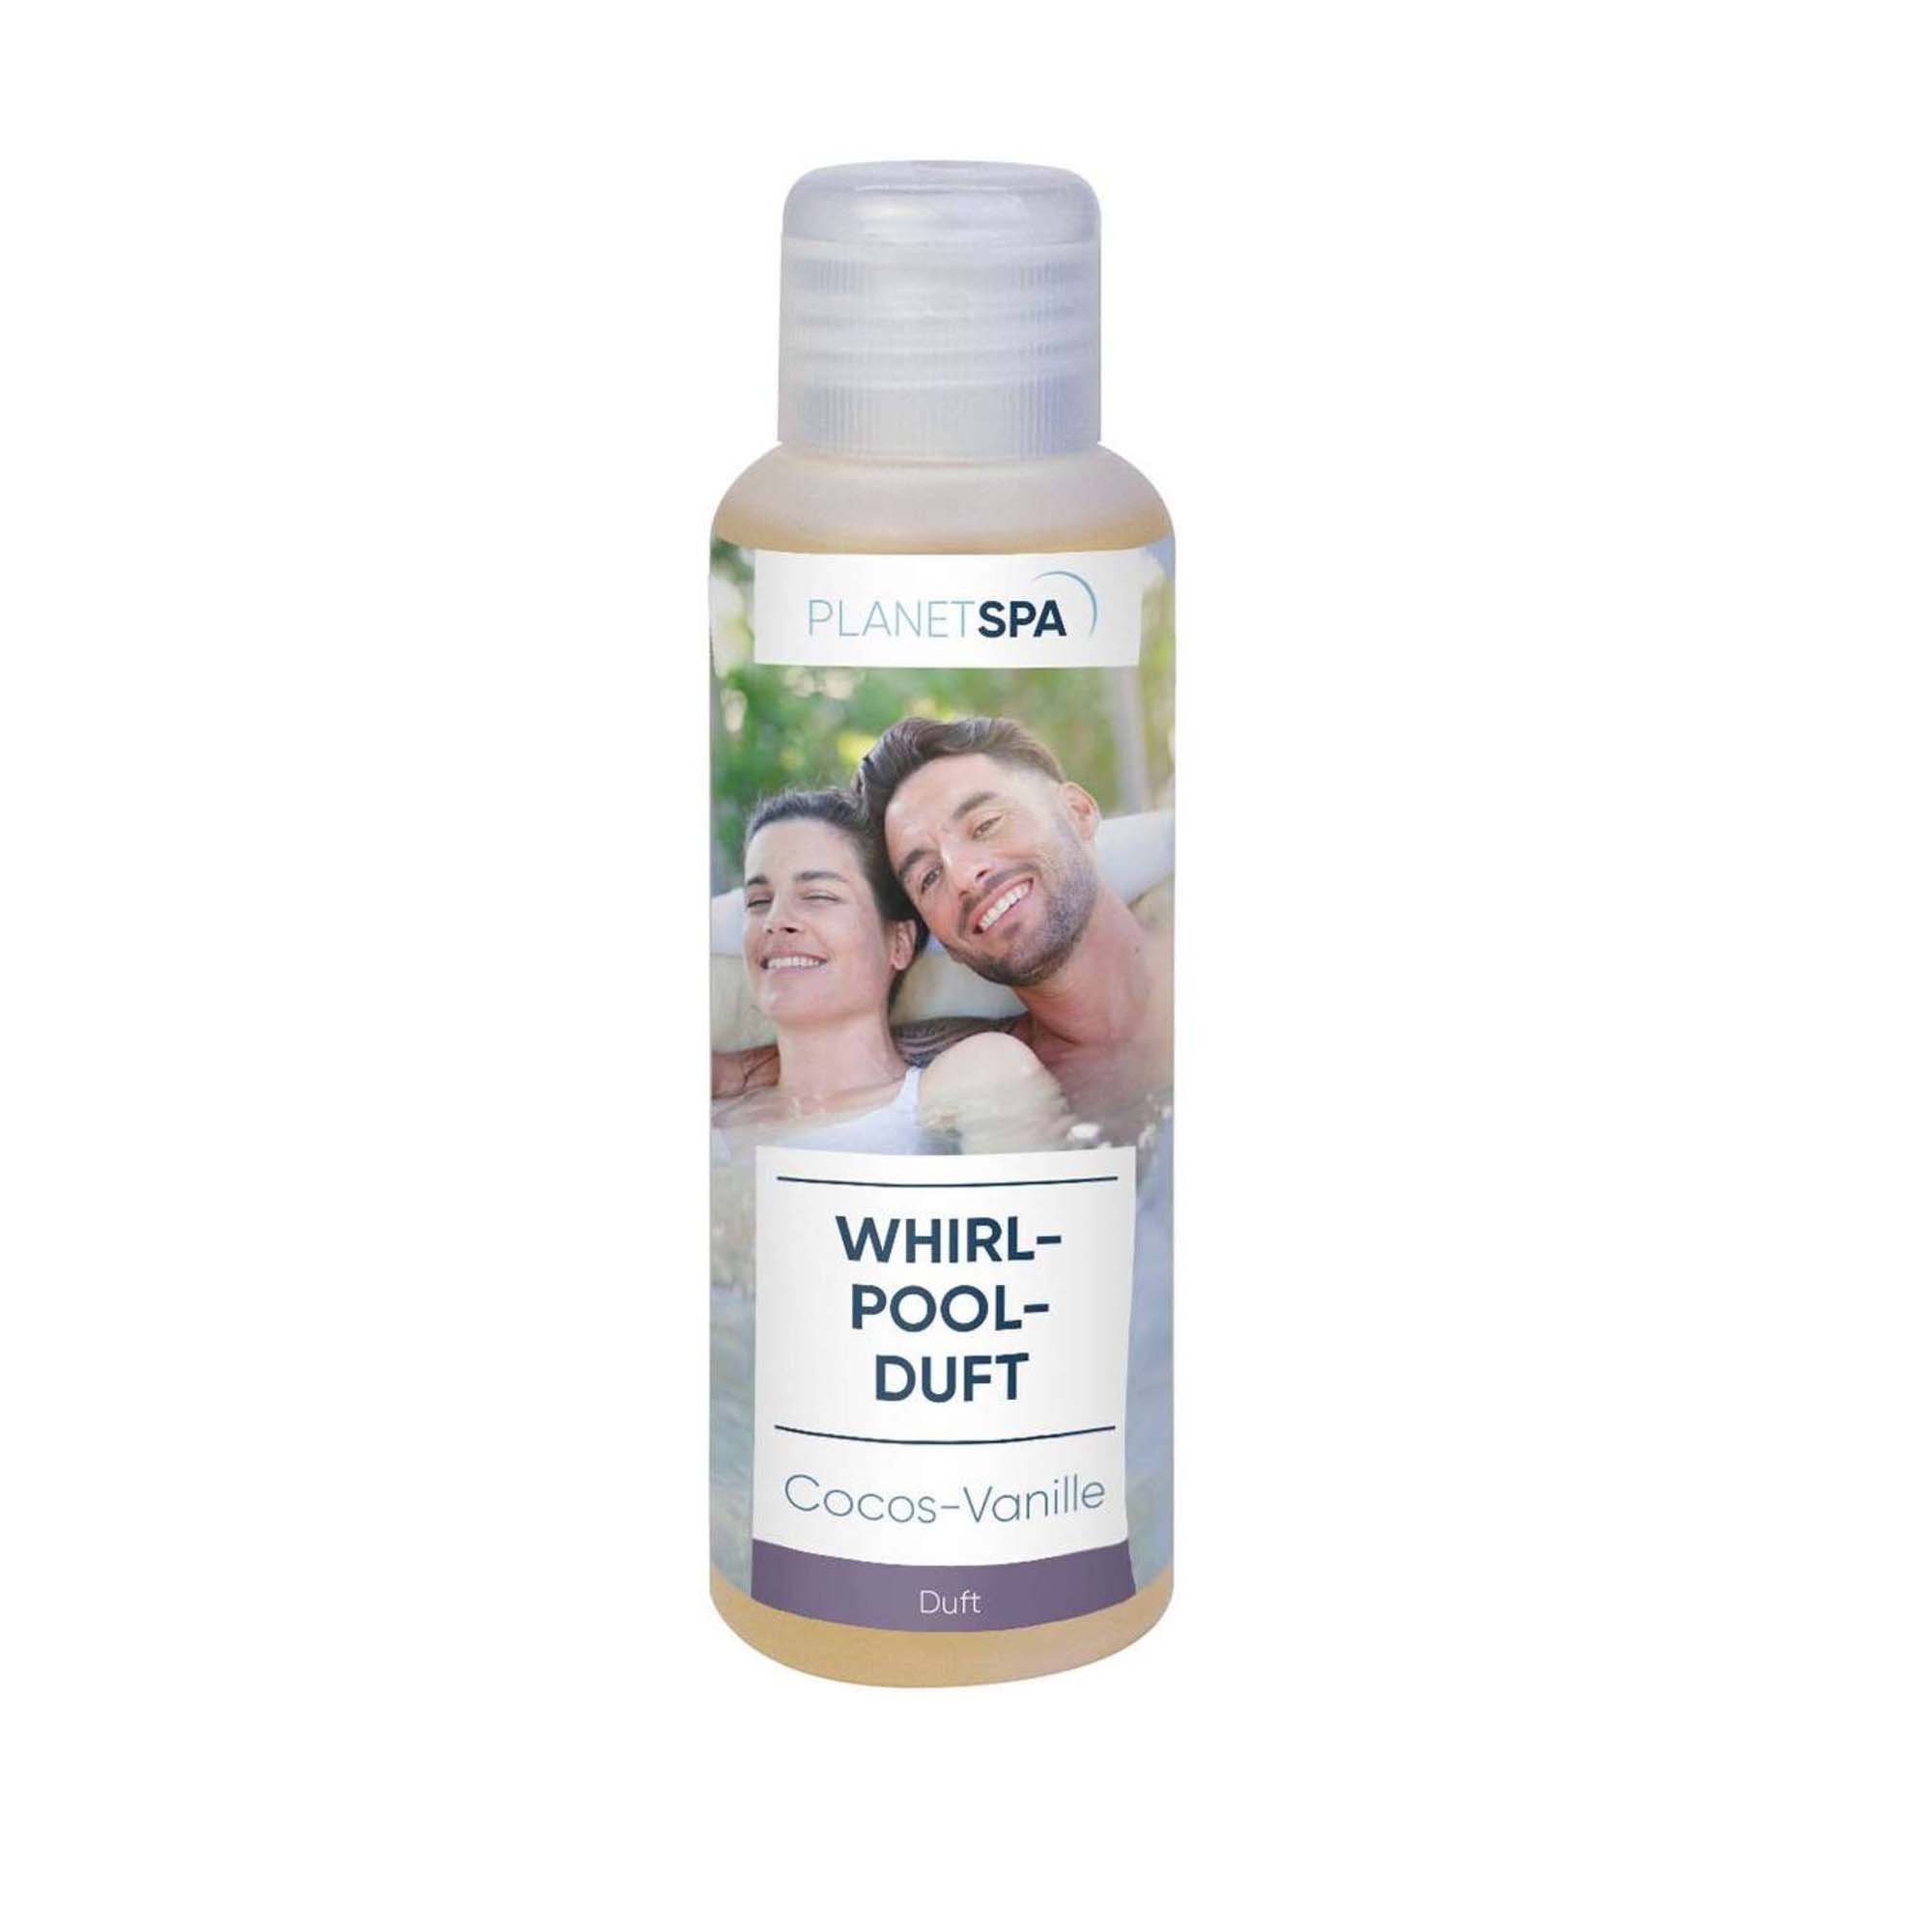 Whirlpoolduft Cocos-Vanille 100 ml Planet SPA